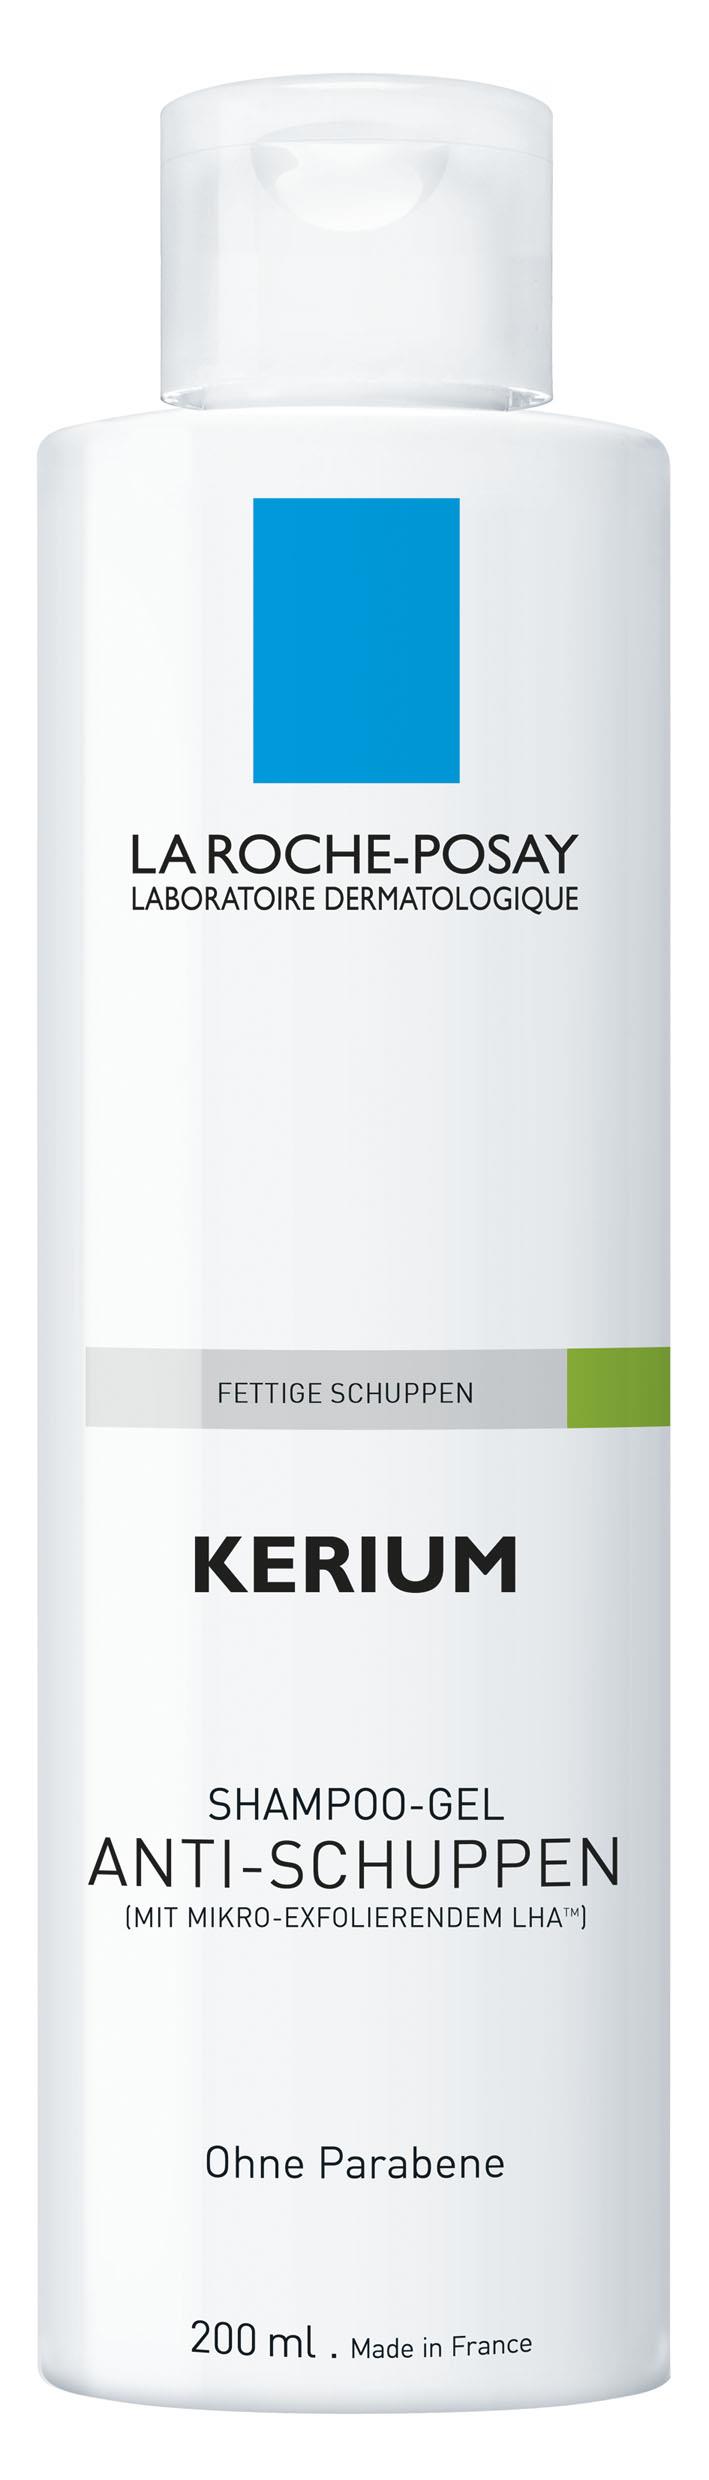 La Roche-Posay Kerium Anti-Schuppen Shampoo Gel